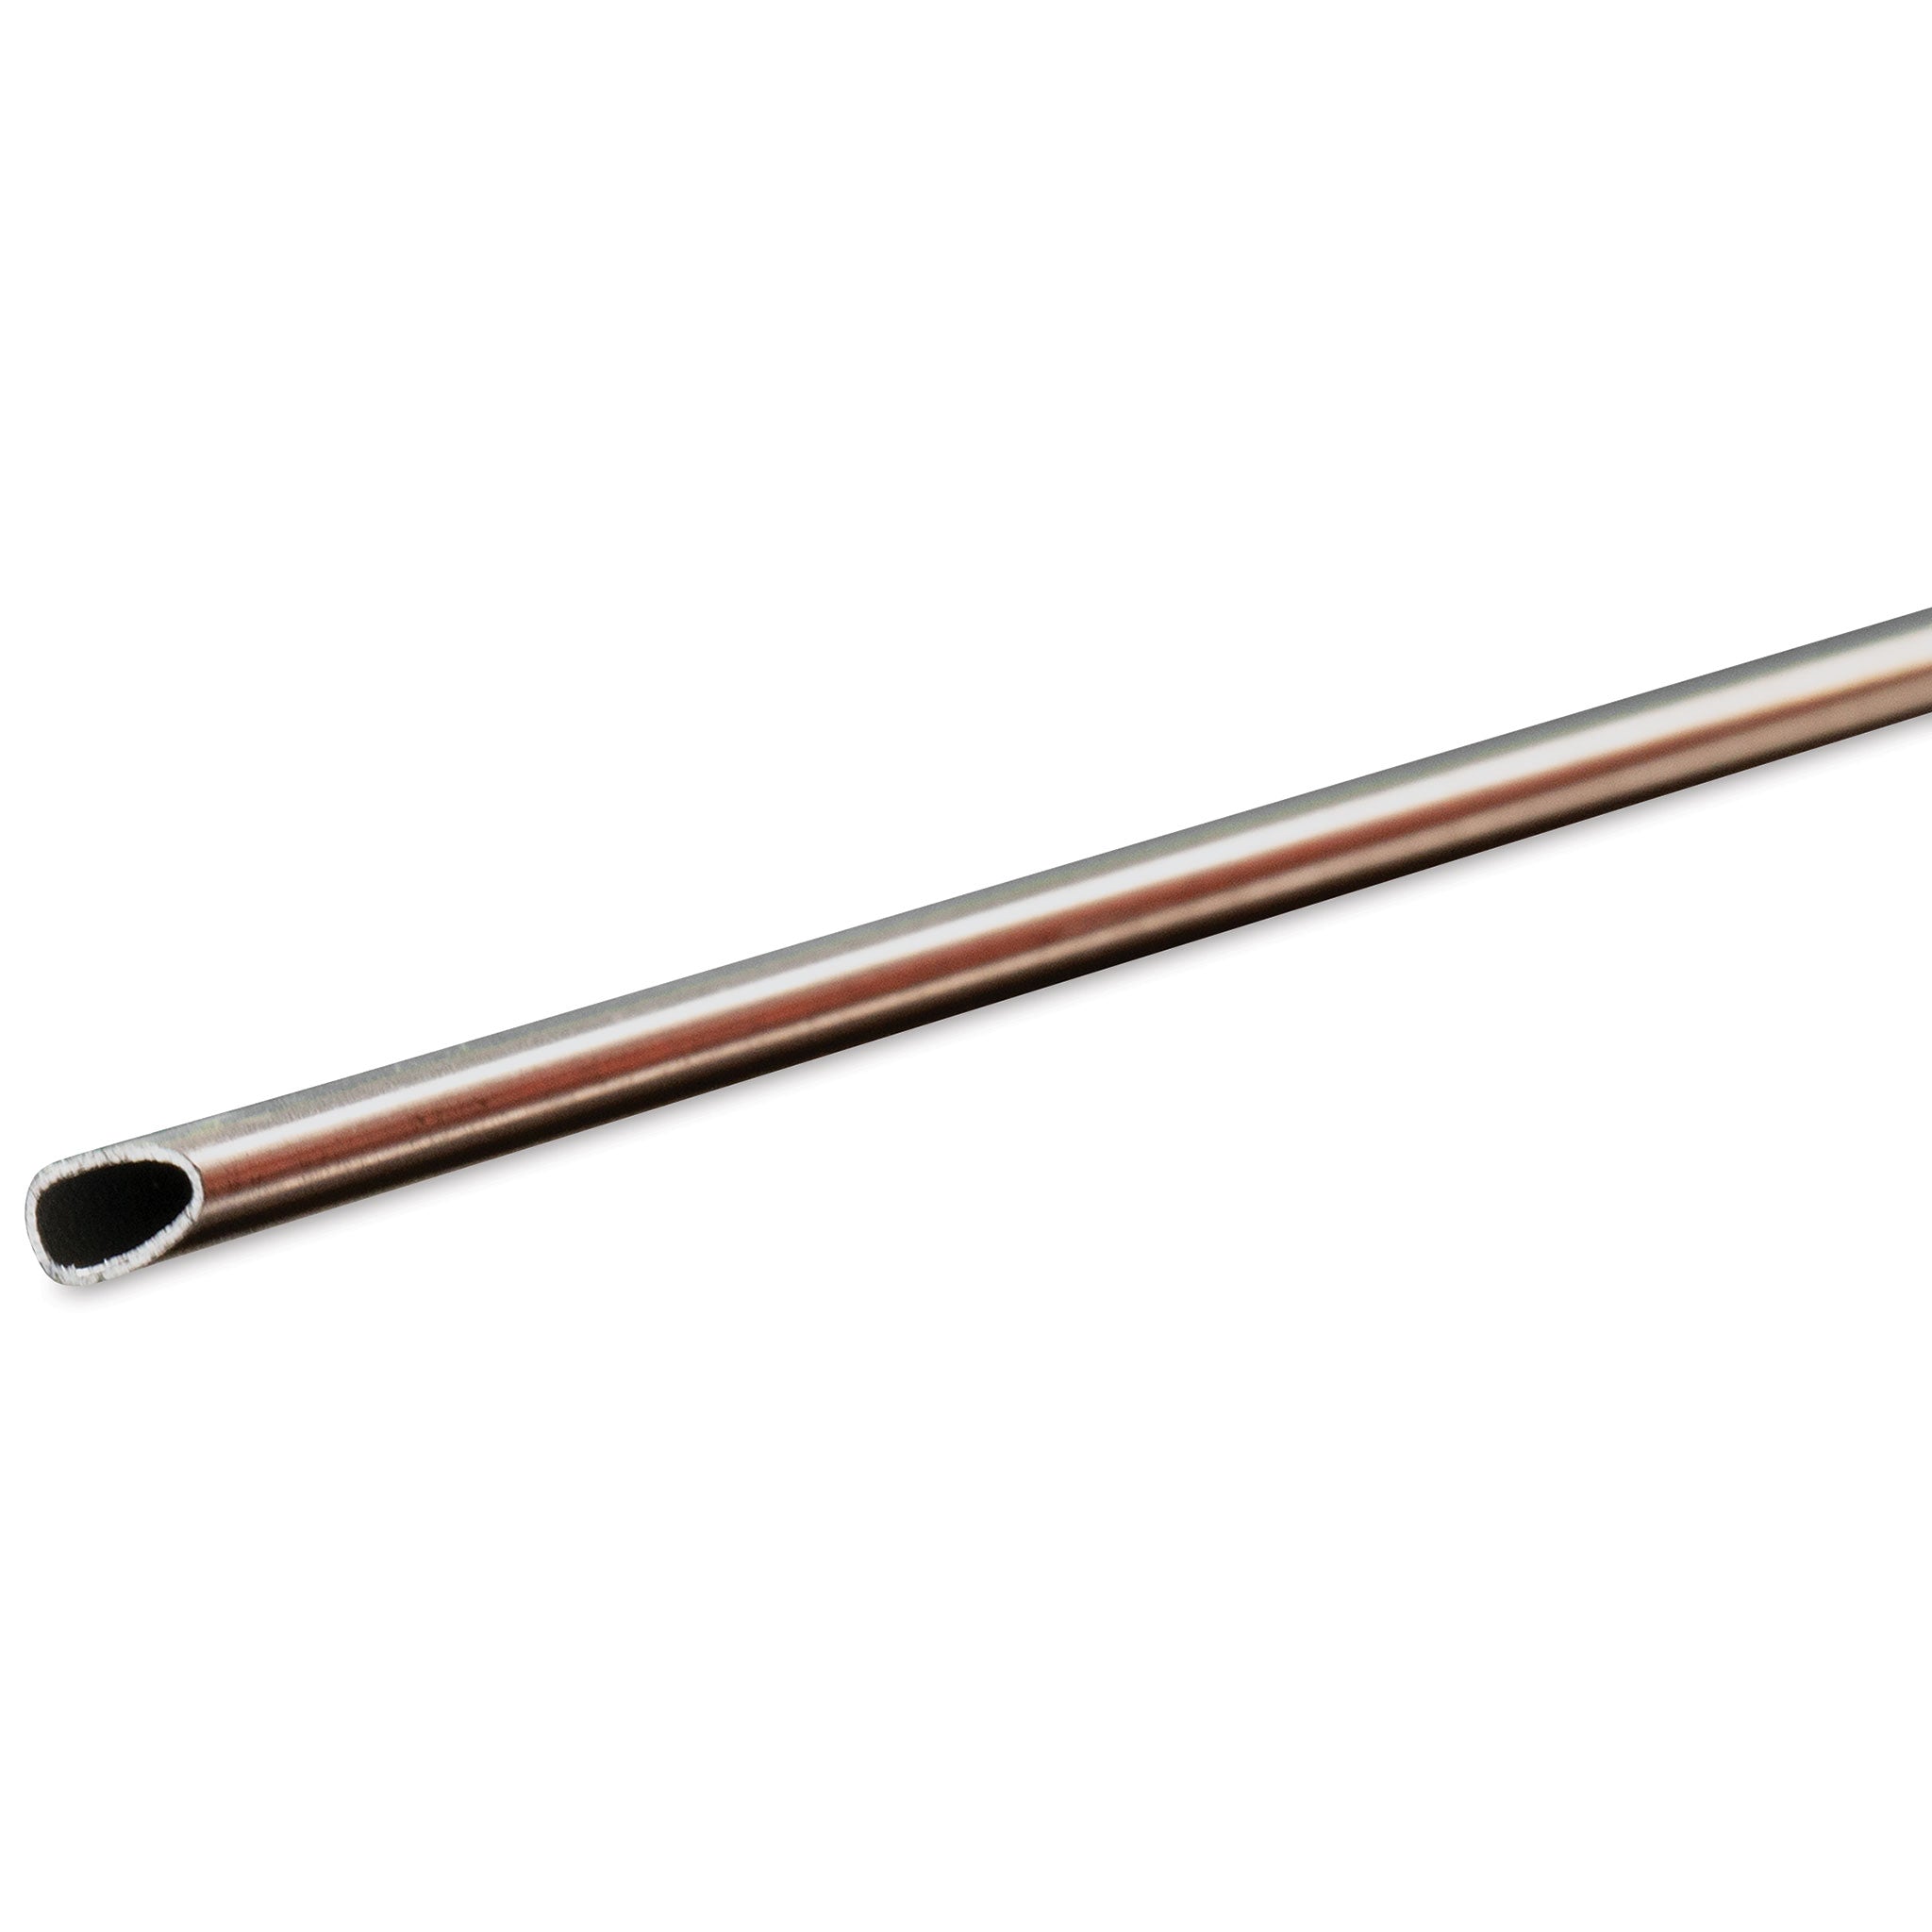 K&S Metals 1100 Aluminum Streamline Tube 1/4" OD x 0.014" Wall x 35" Long (1 Piece)